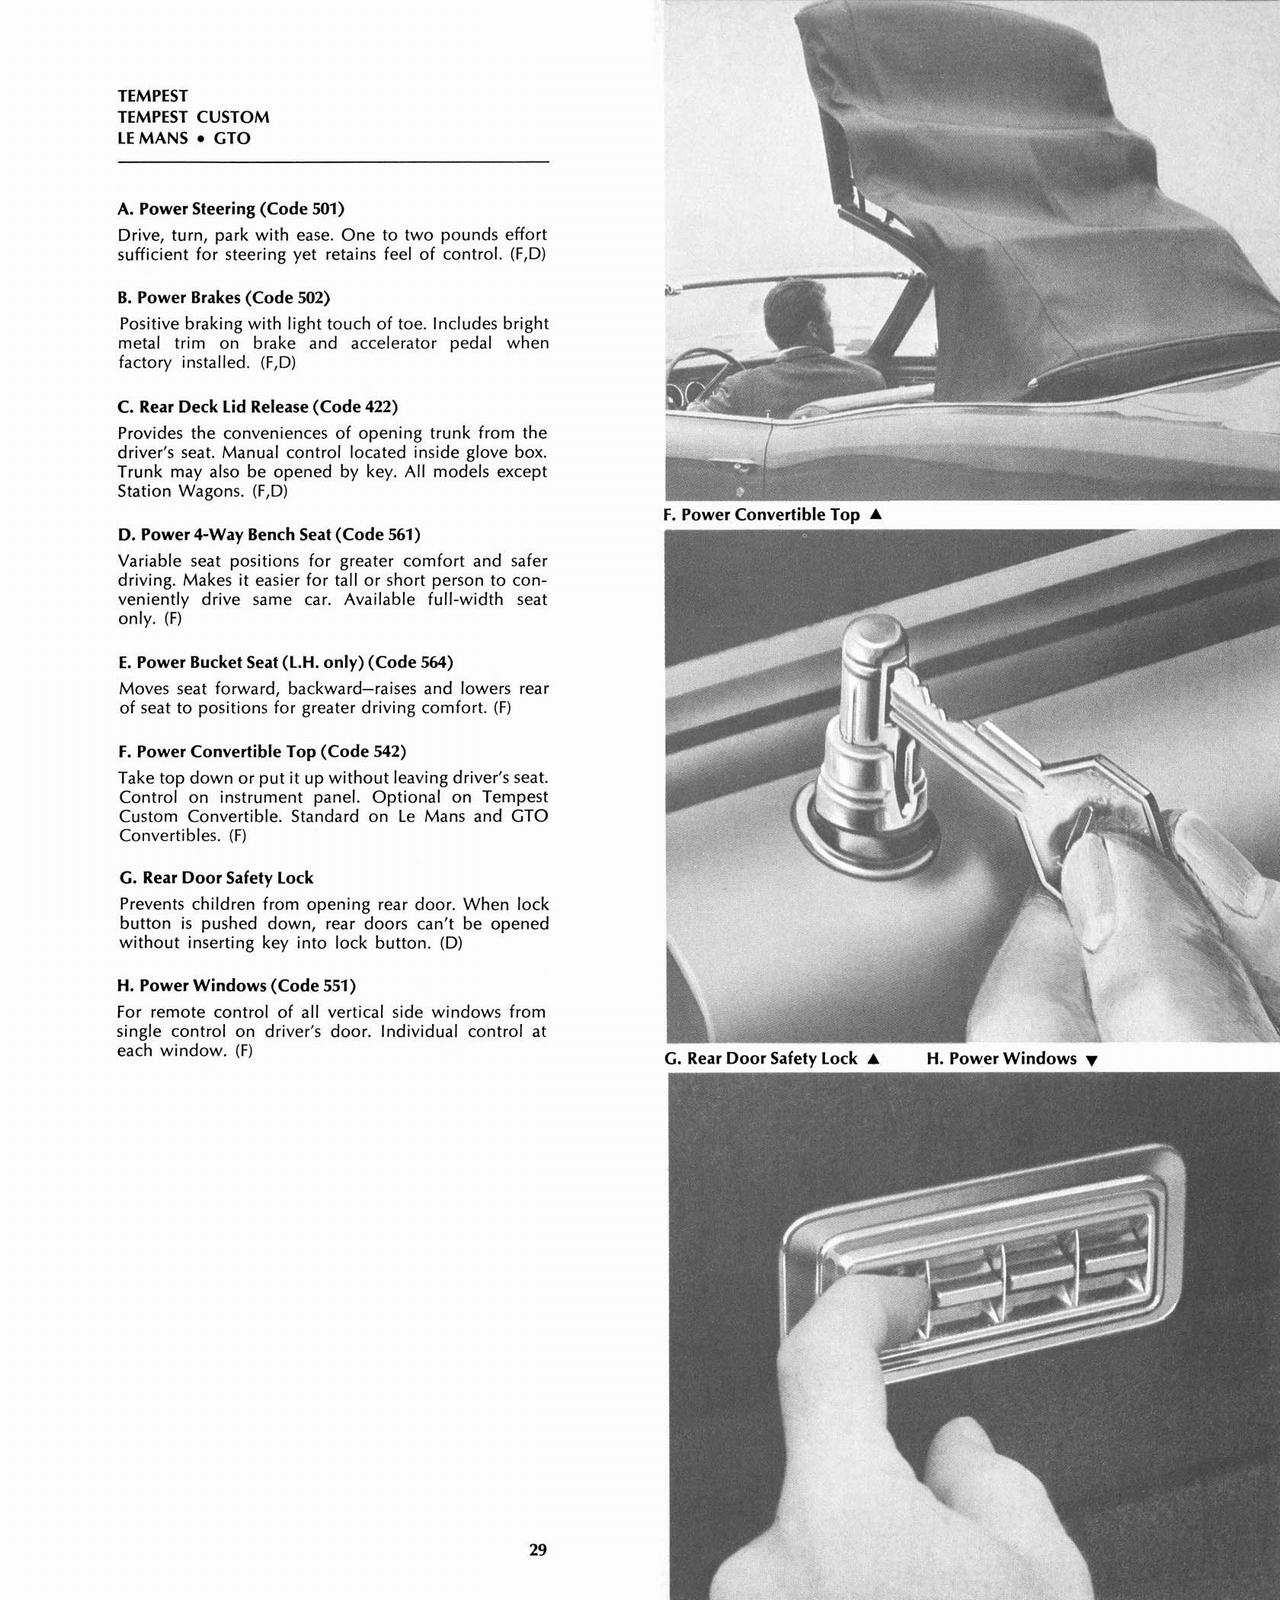 n_1966 Pontiac Accessories Catalog-29.jpg